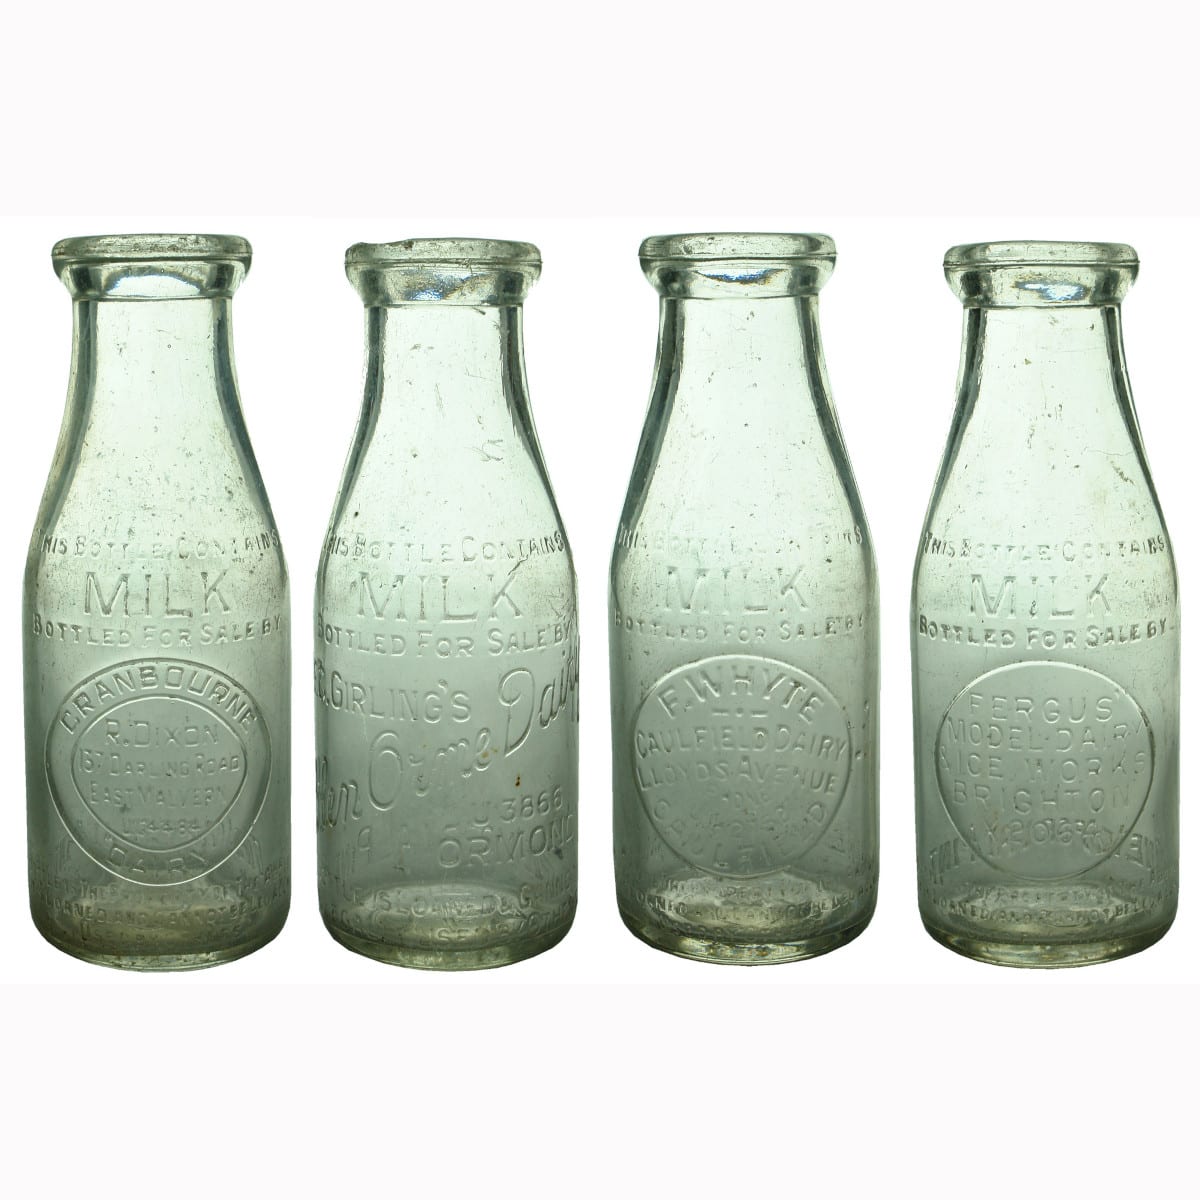 Four wide mouth Pint Milk Bottles: Dixon, East Malvern; Glen Orme Dairy; Whyte Caulfield Dairy; Fergus' Model Dairy.